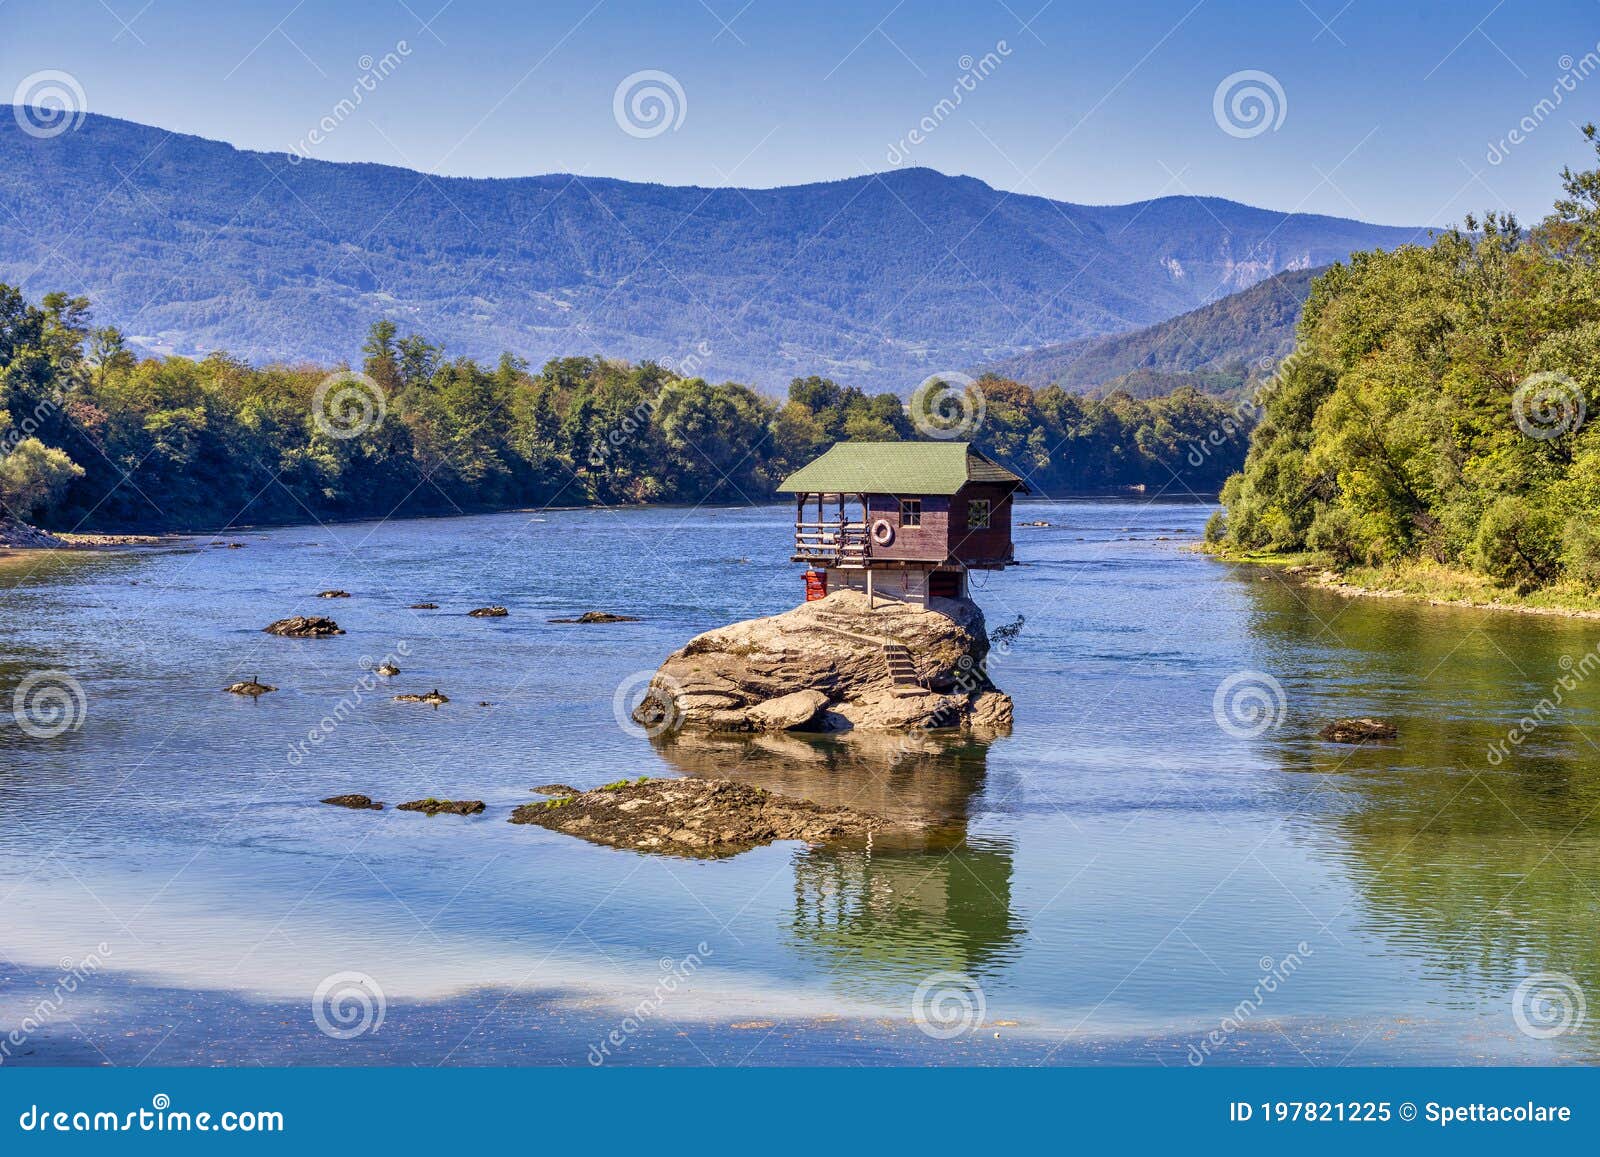 house on the rock at the river drina in bajina basta